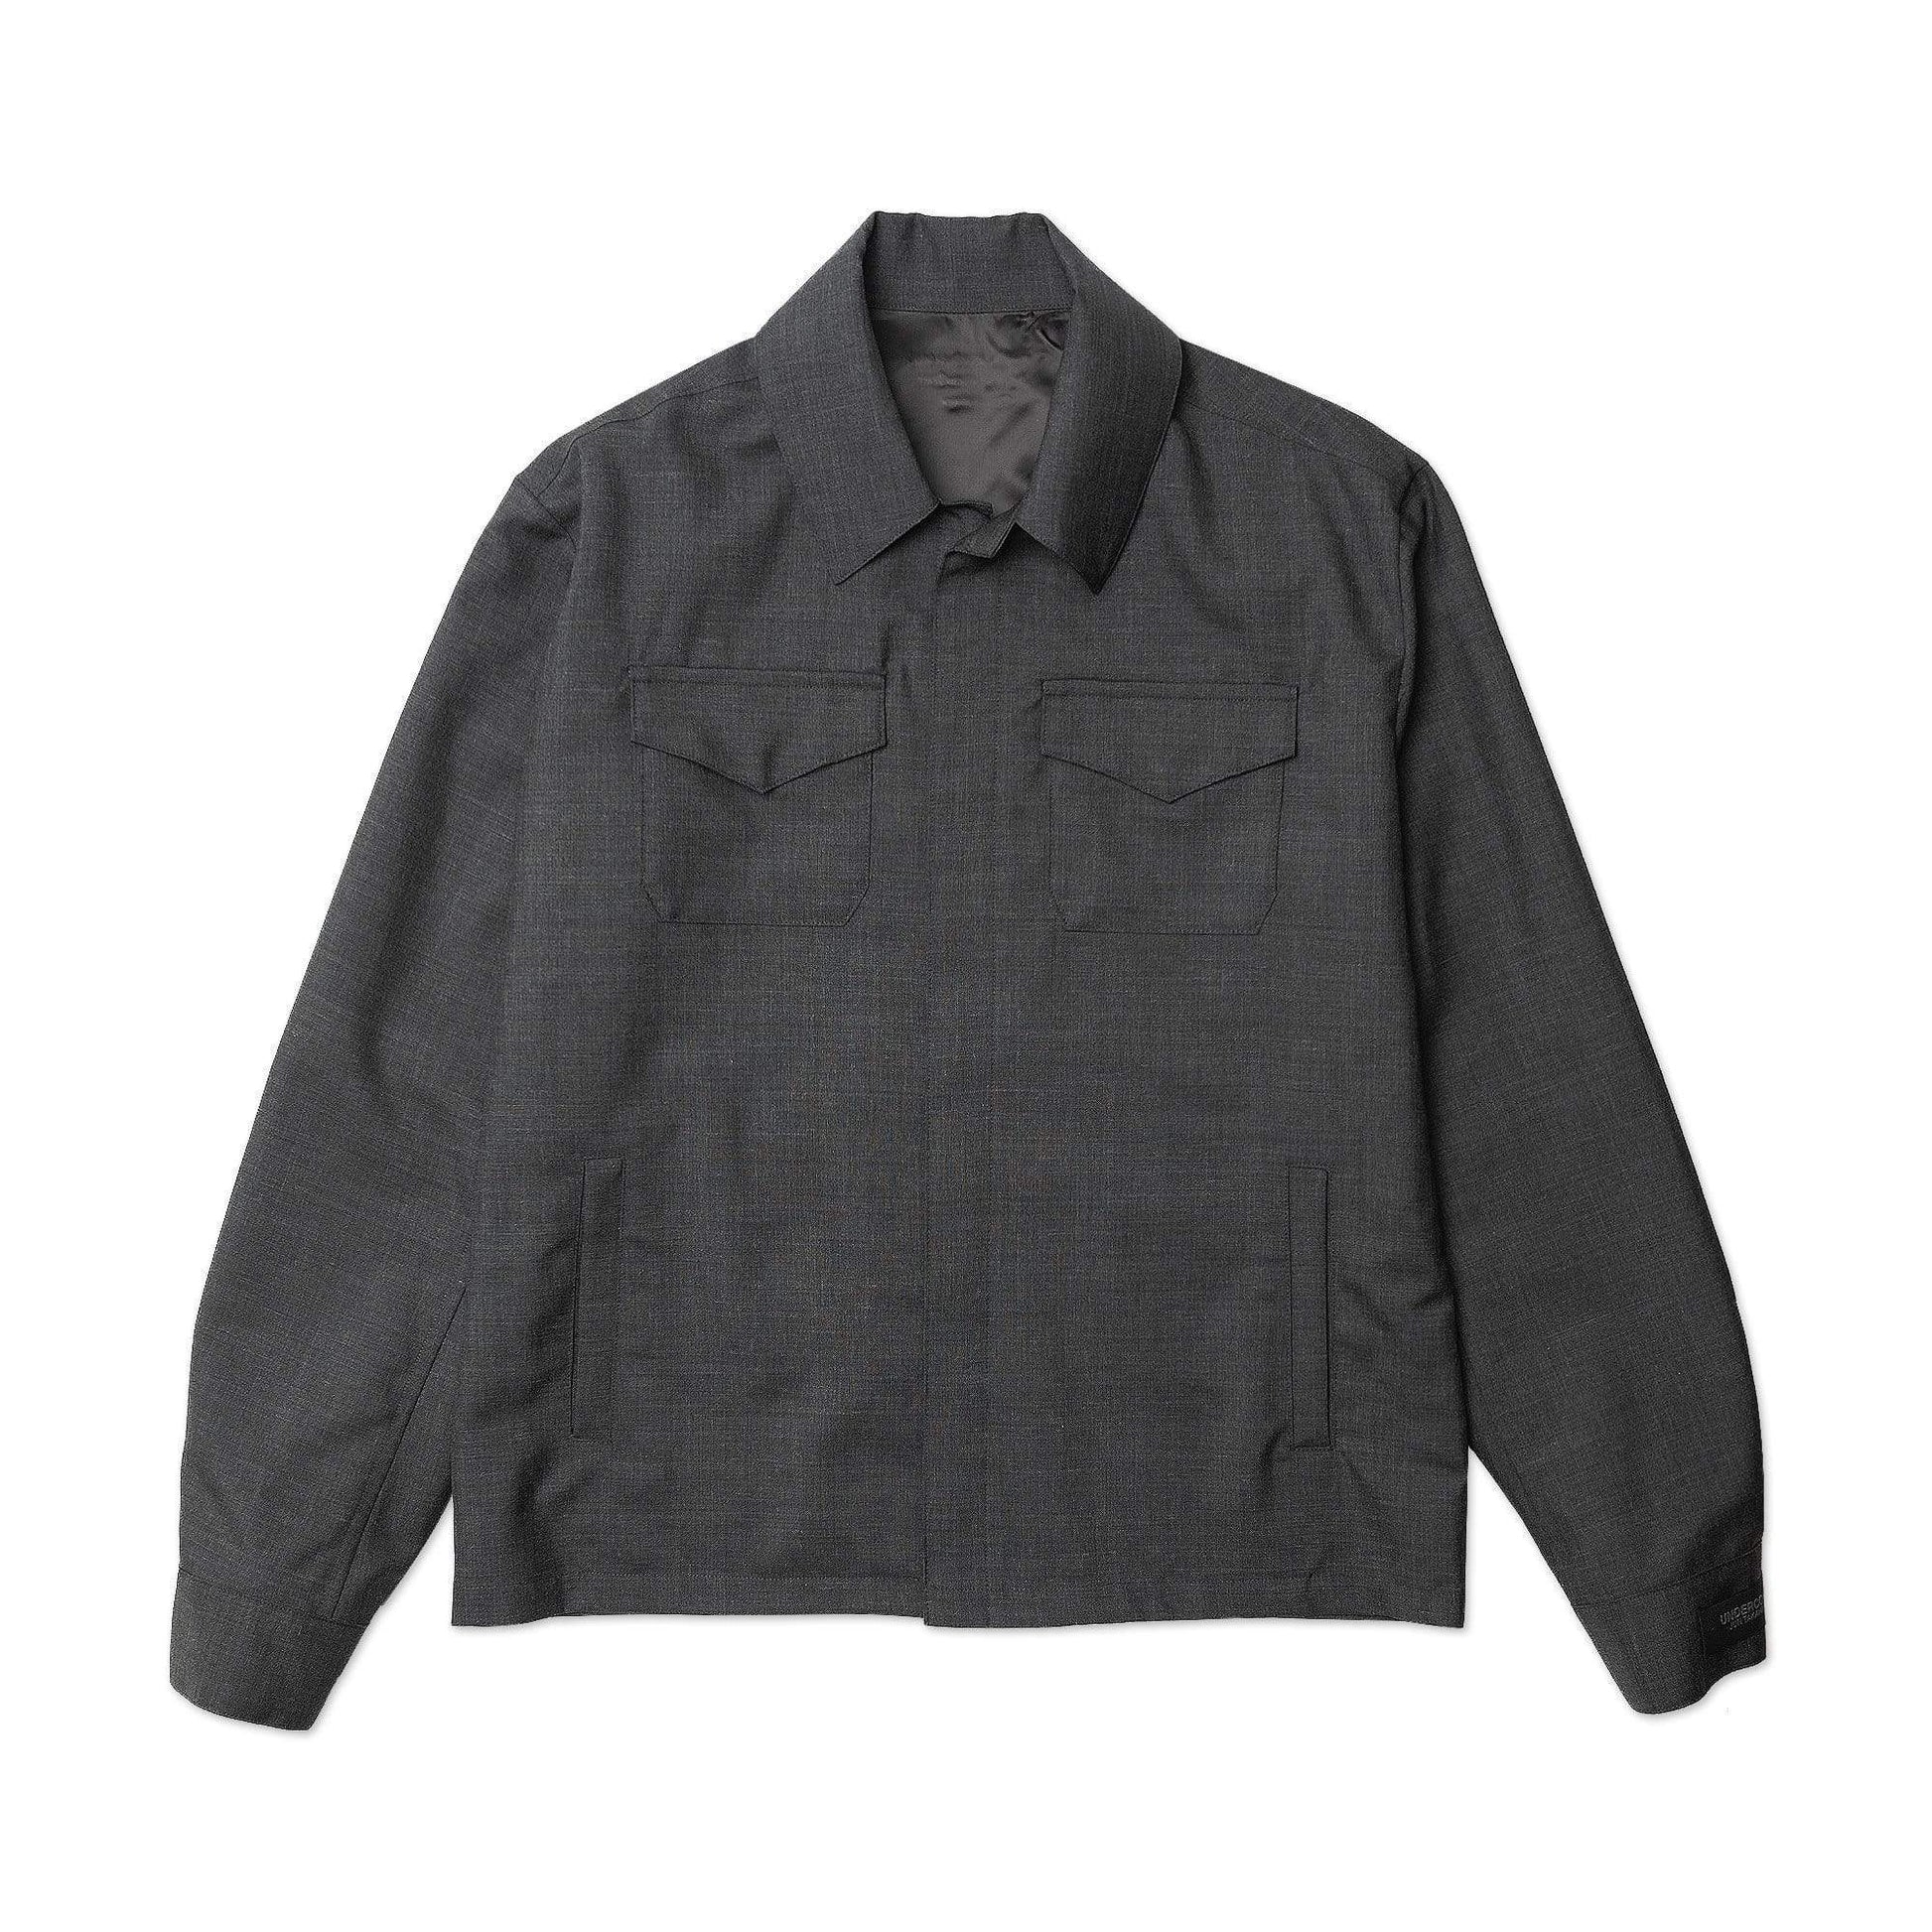 undercover blouson jacket (charcoal) - ucy4204-1 - a.plus - Image - 1